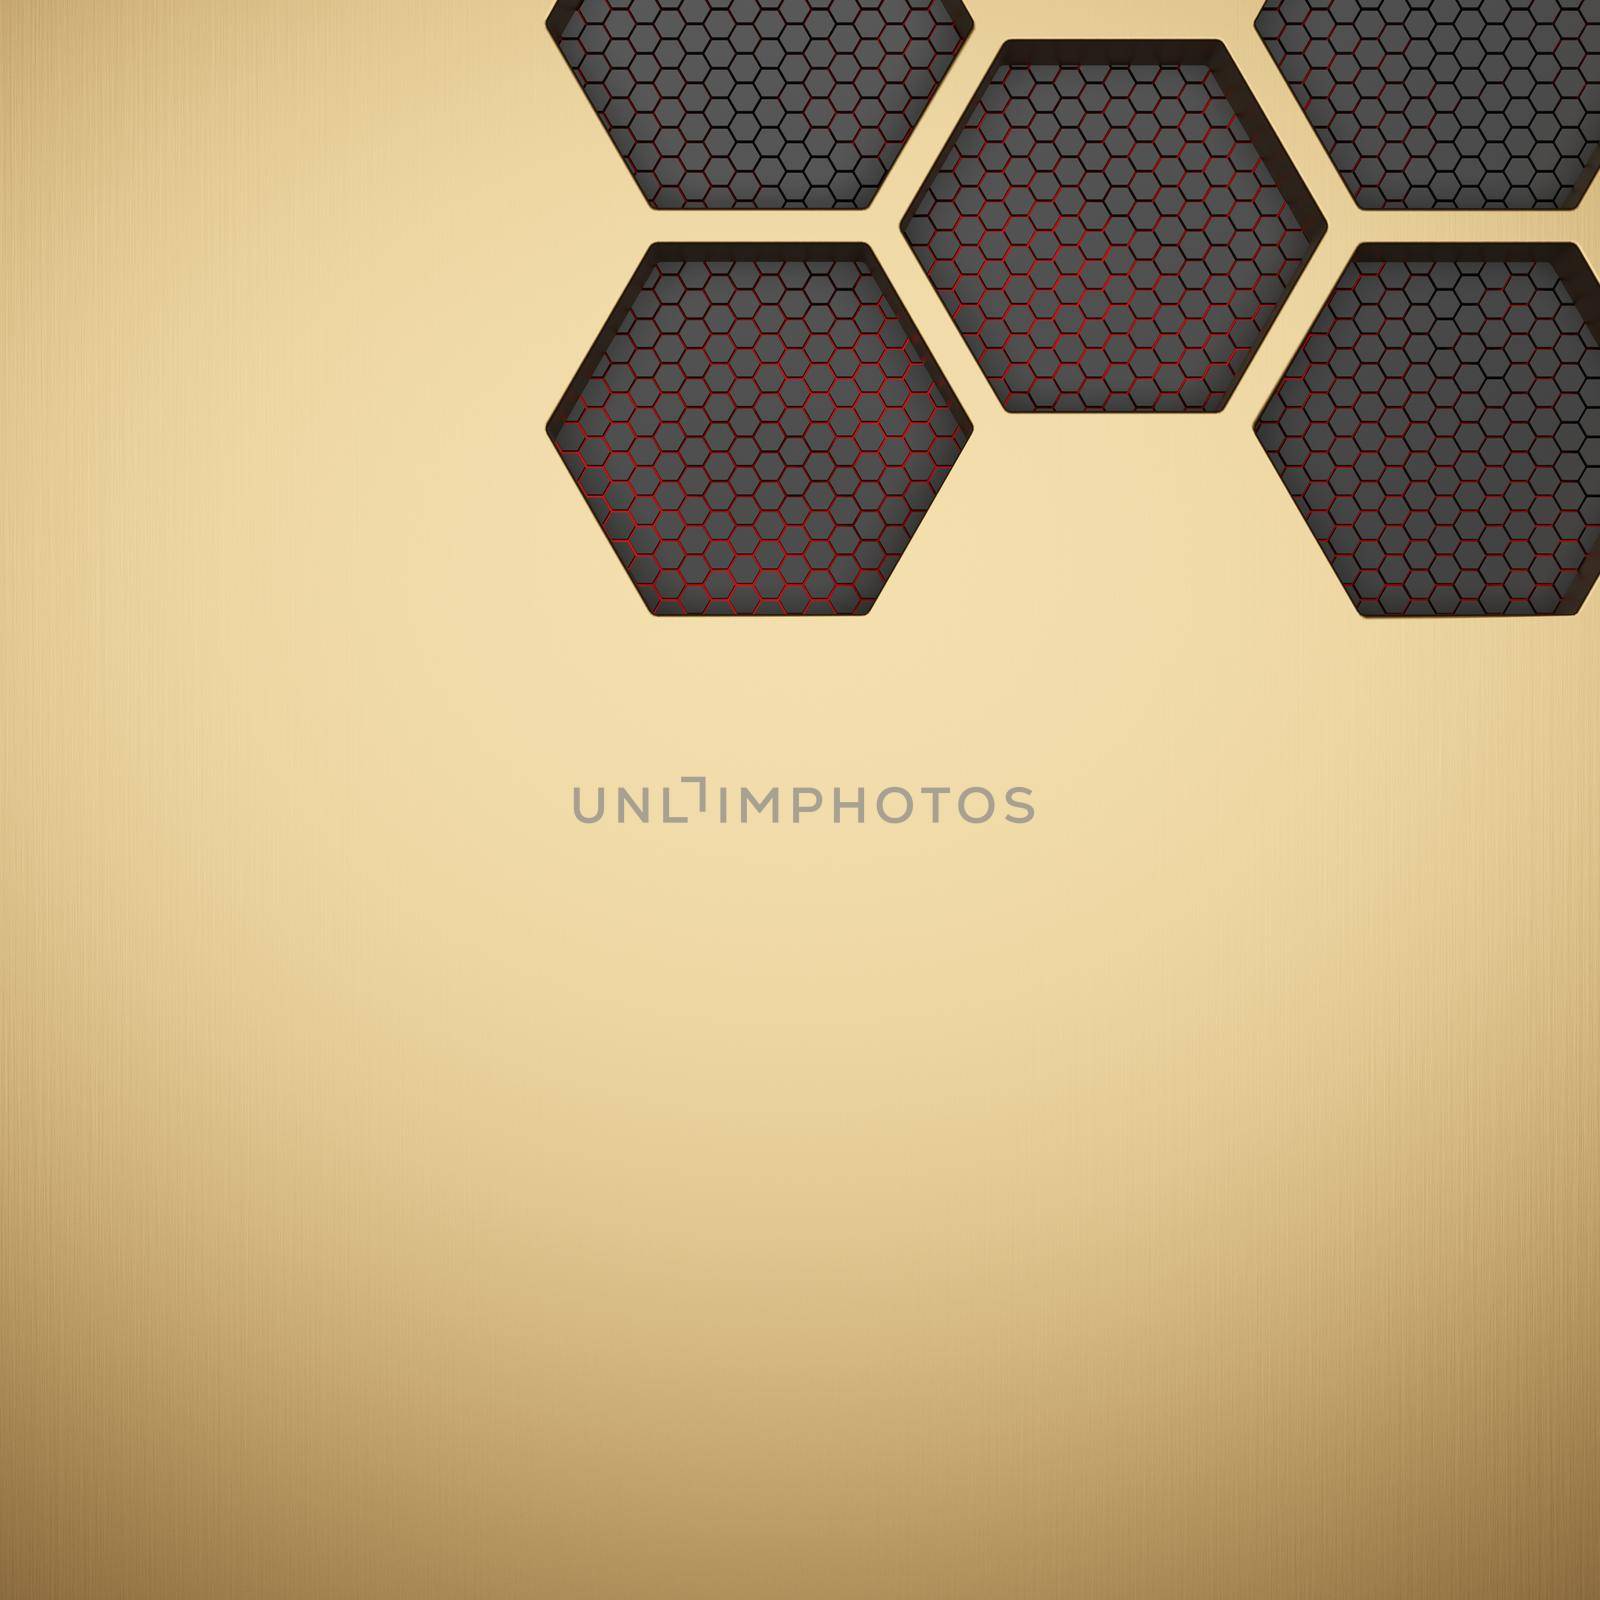 Gold metallic honeycomb and hexagon background pattern. 3d rendering